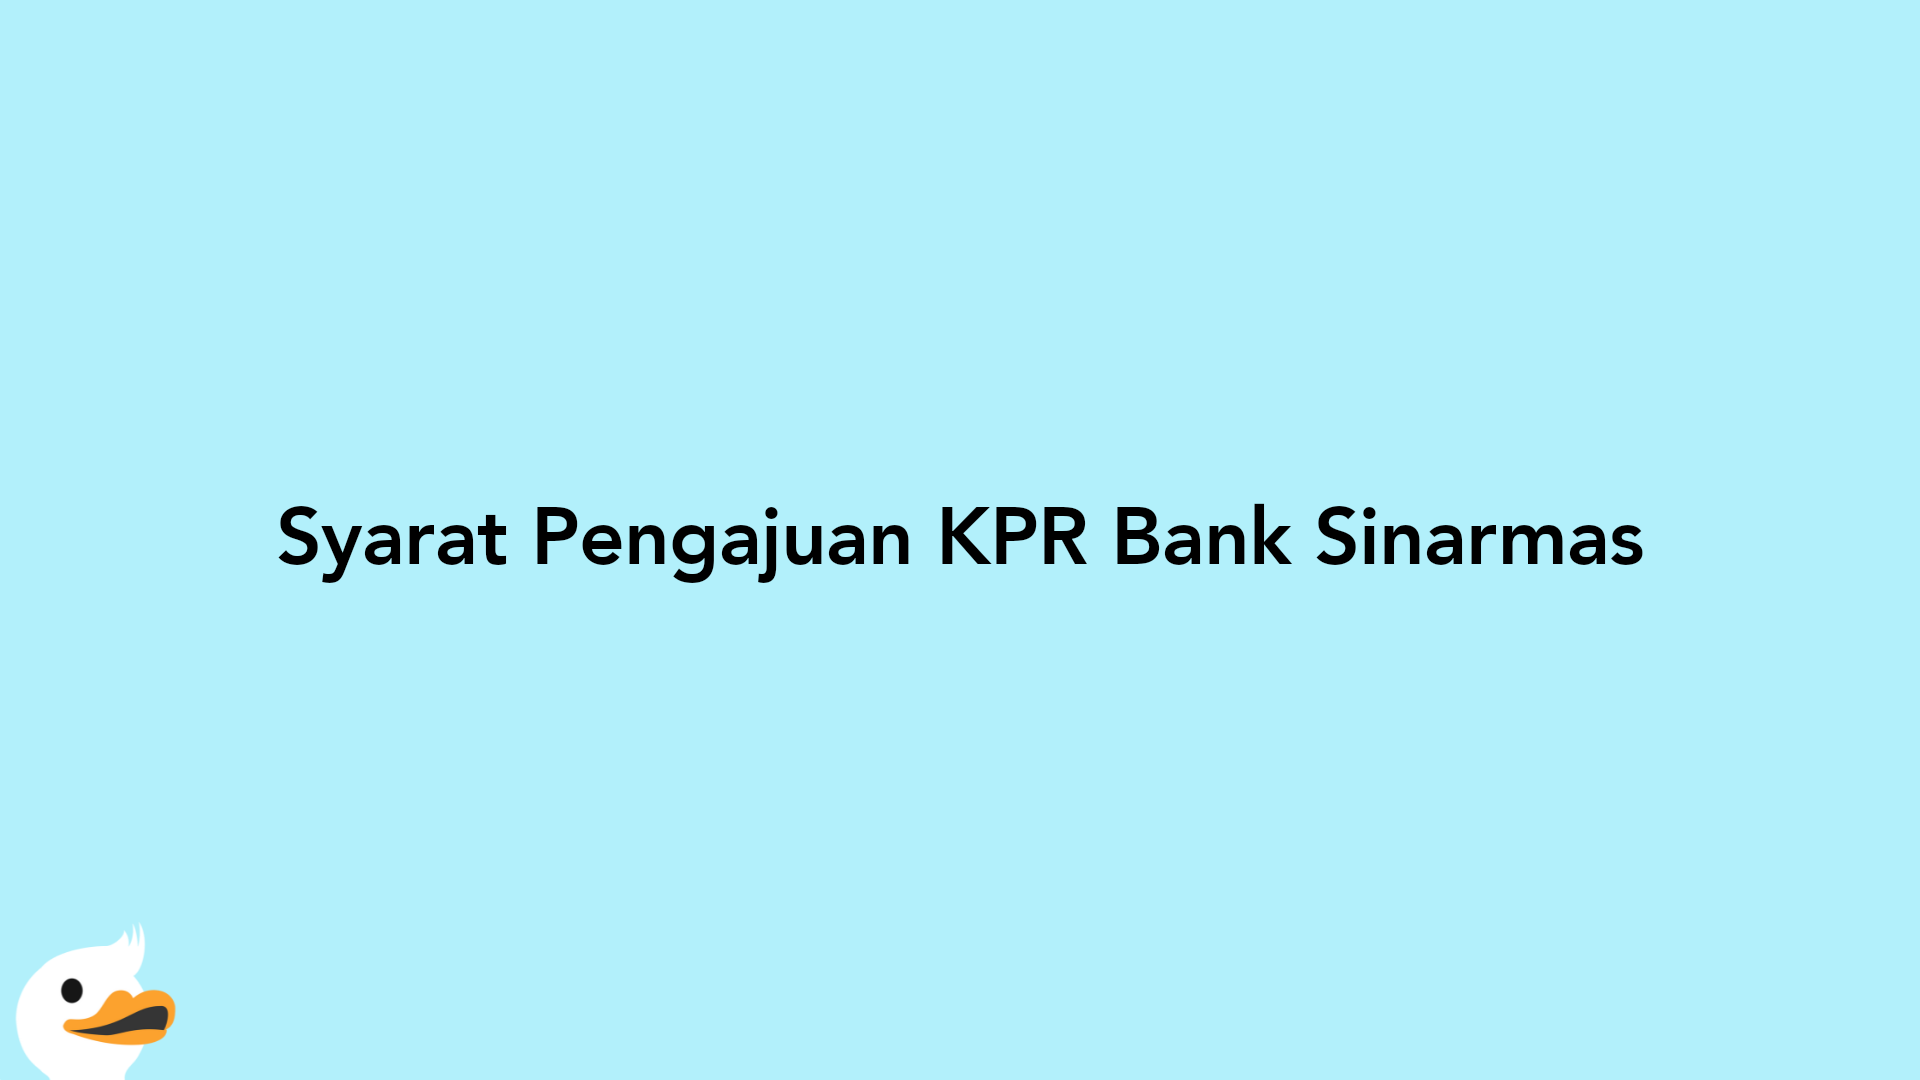 Syarat Pengajuan KPR Bank Sinarmas